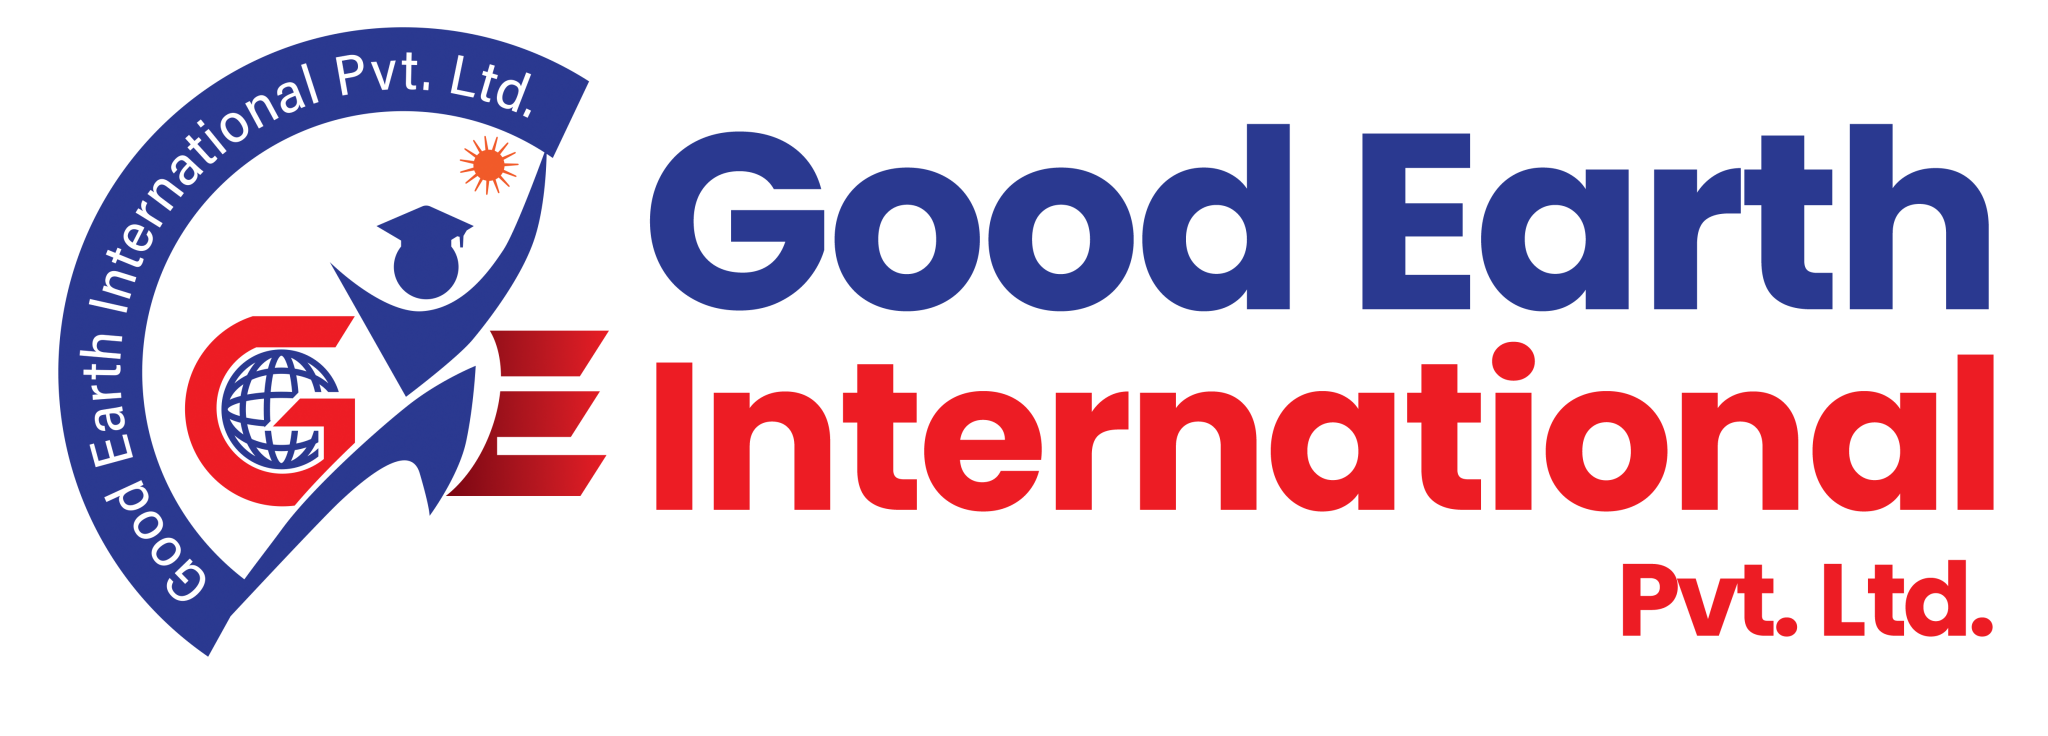 Good Earth International